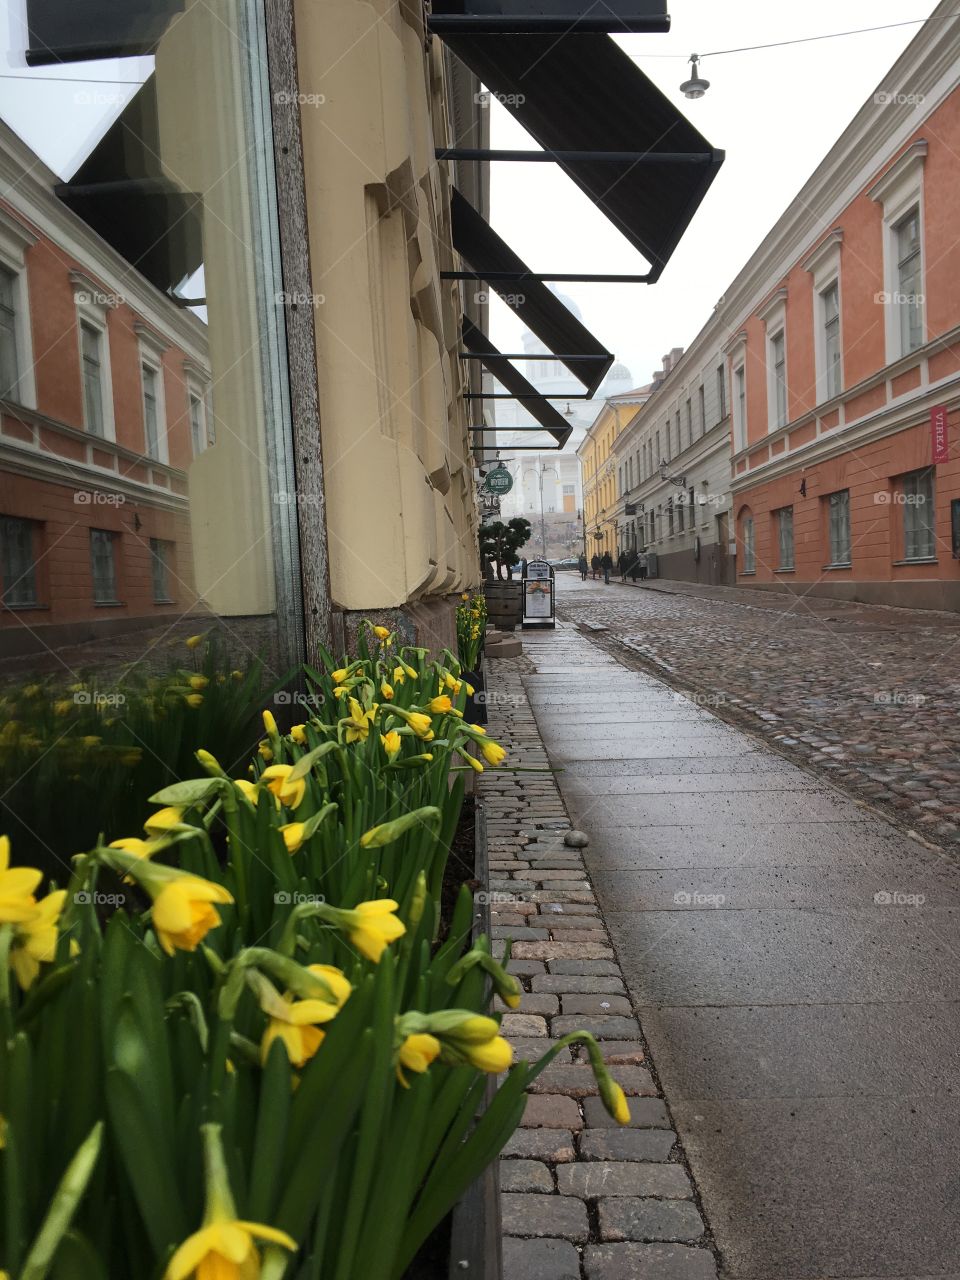 April in Finland